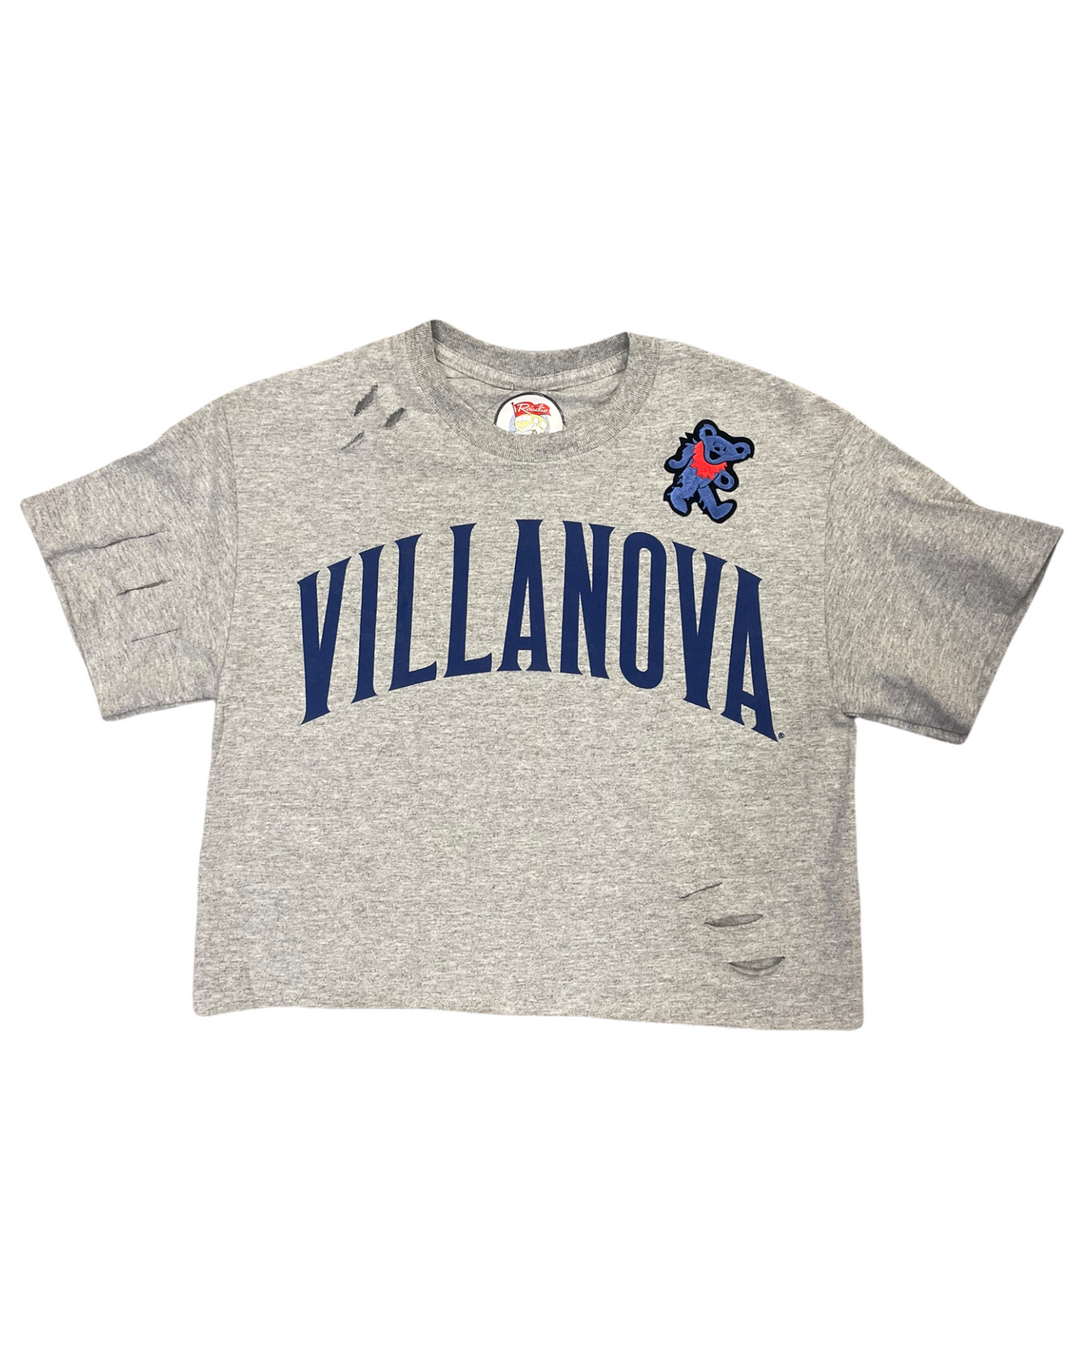 Villanova Vintage T-Shirt